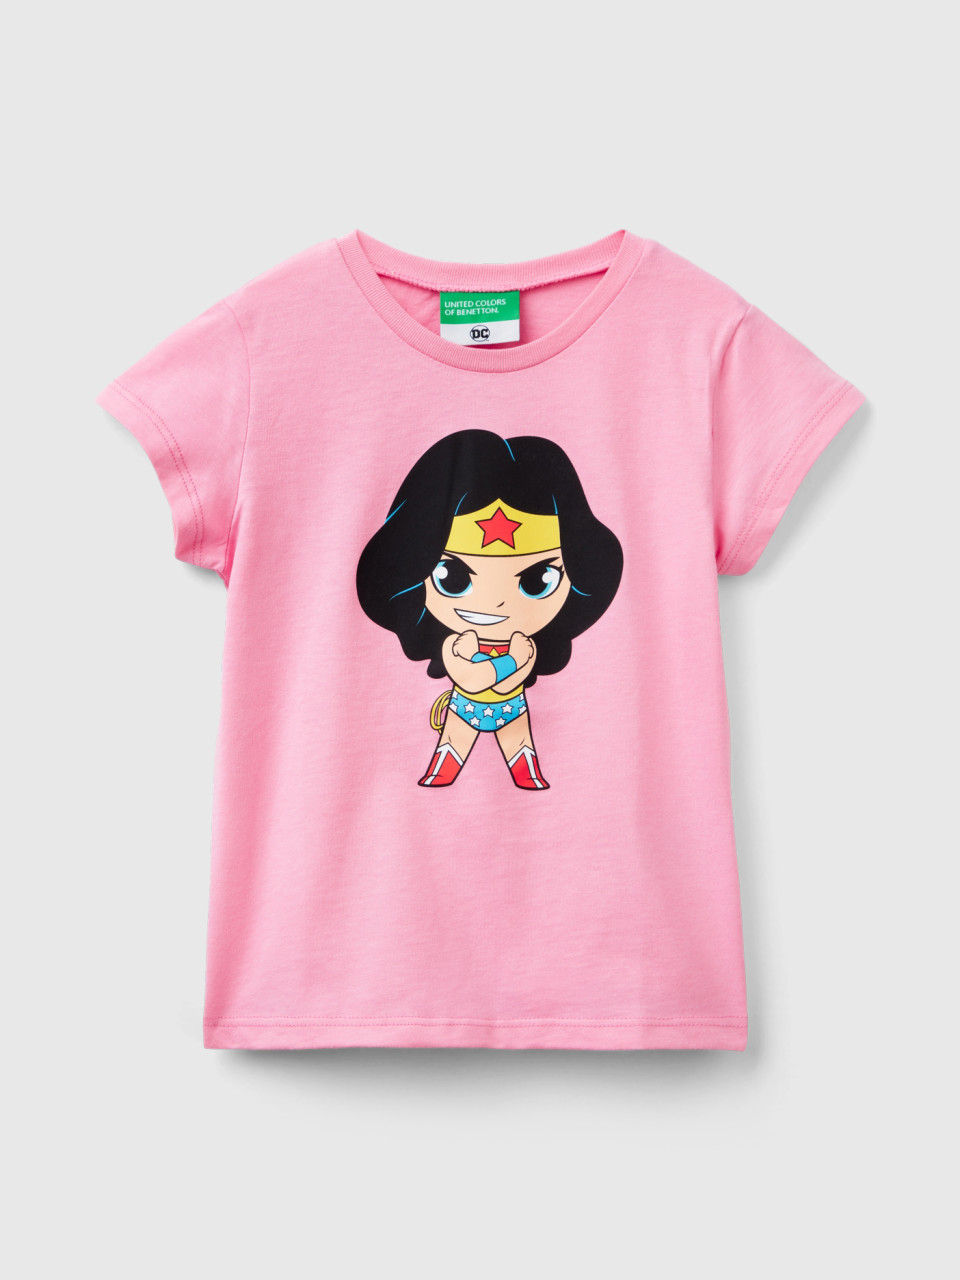 Benetton, Wonder Woman ©&™ Dc Comics T-shirt, Pink, Kids